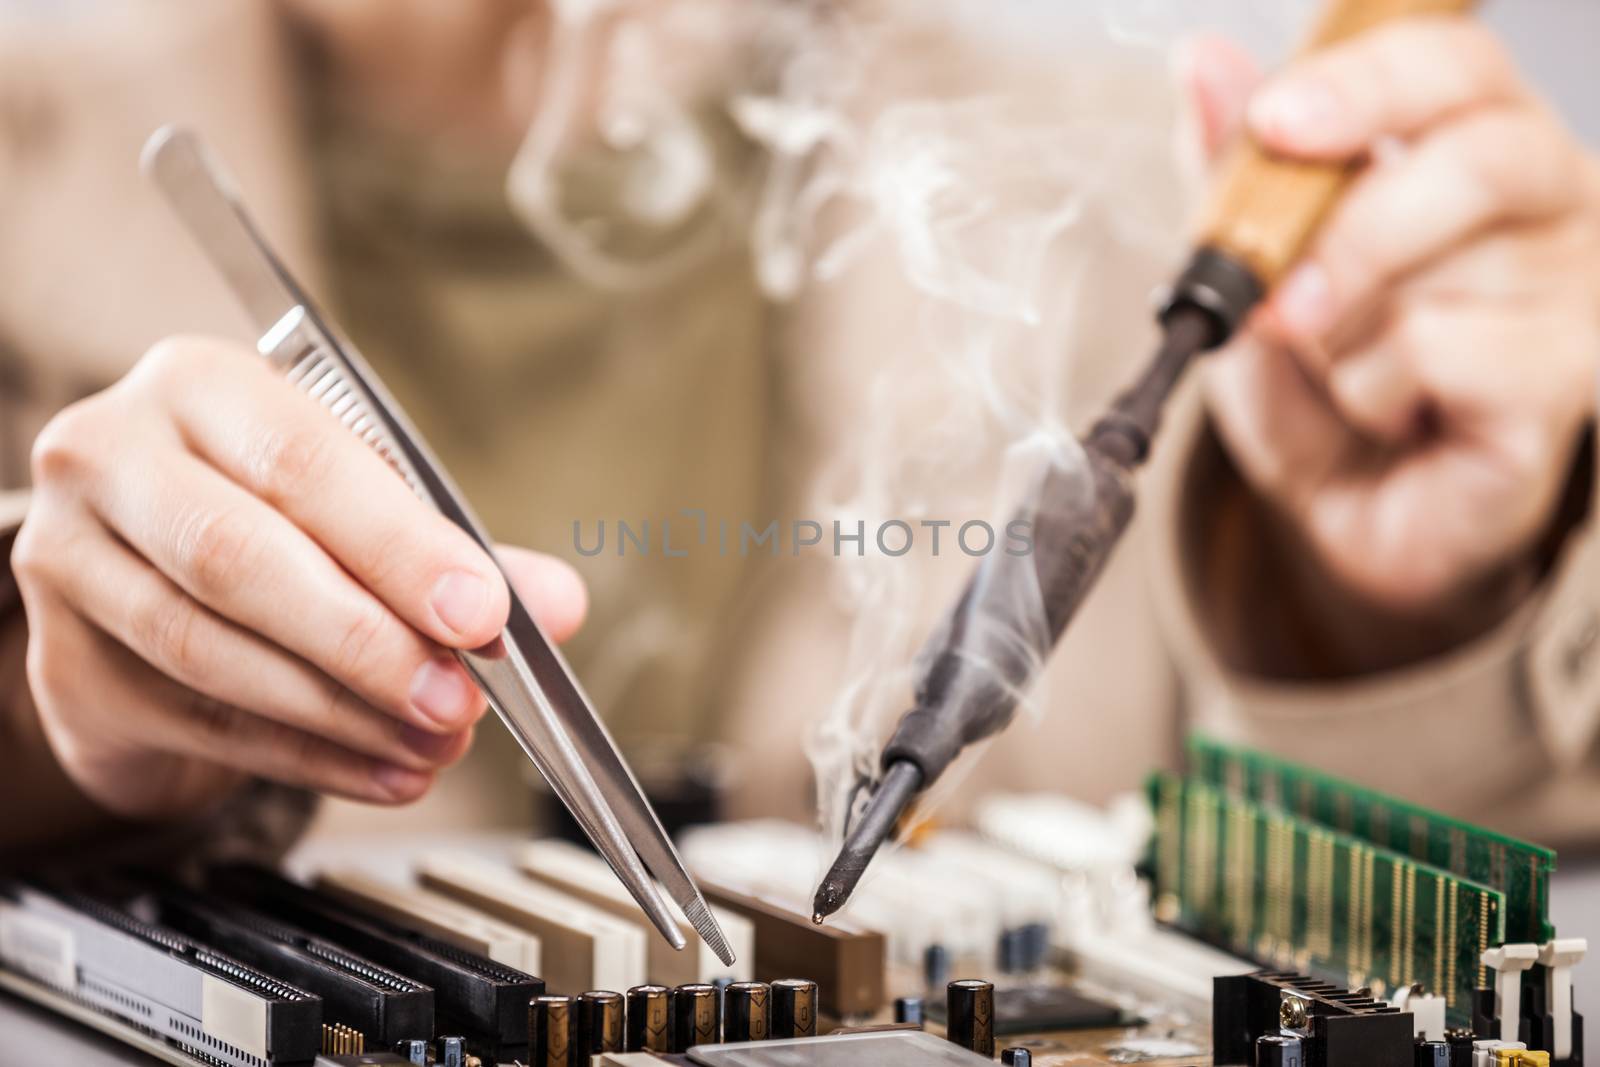 Manual worker human hand holding soldering iron tool repairing computer electronics circuit board